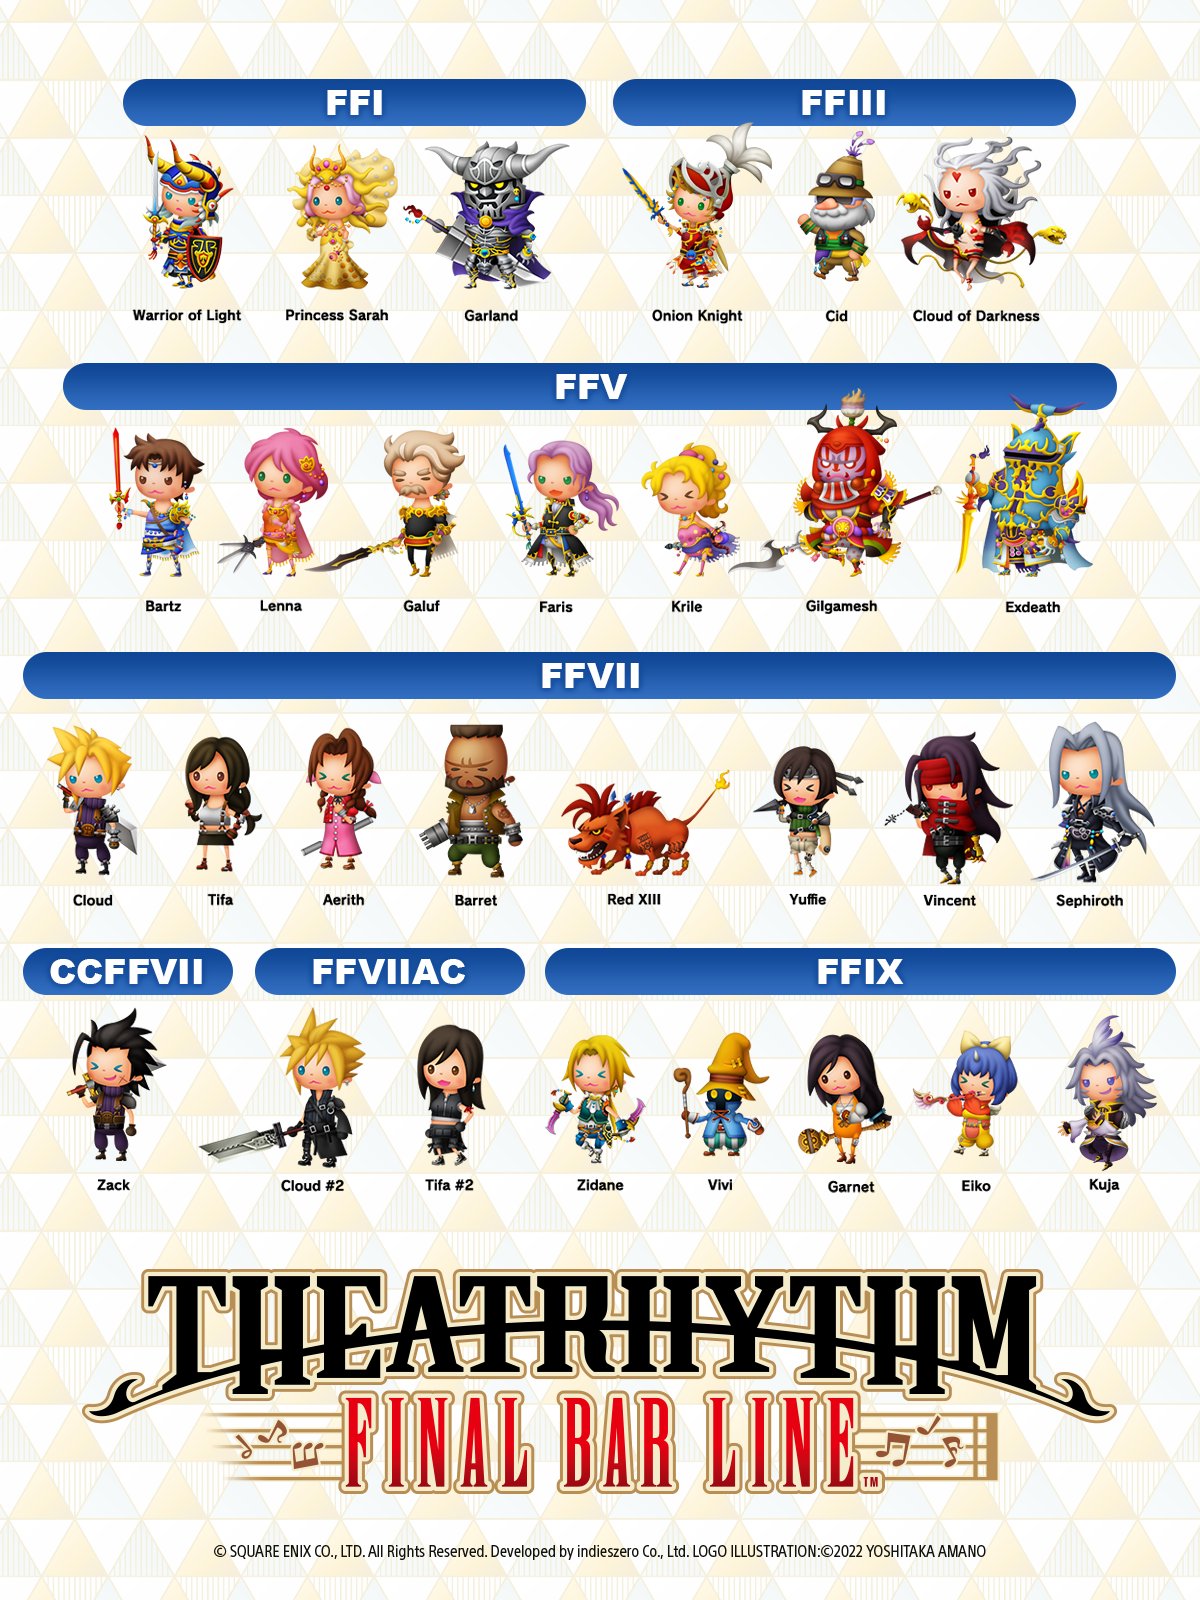 Theatrhythm Final Bar Line Final Fantasy Characters Teased